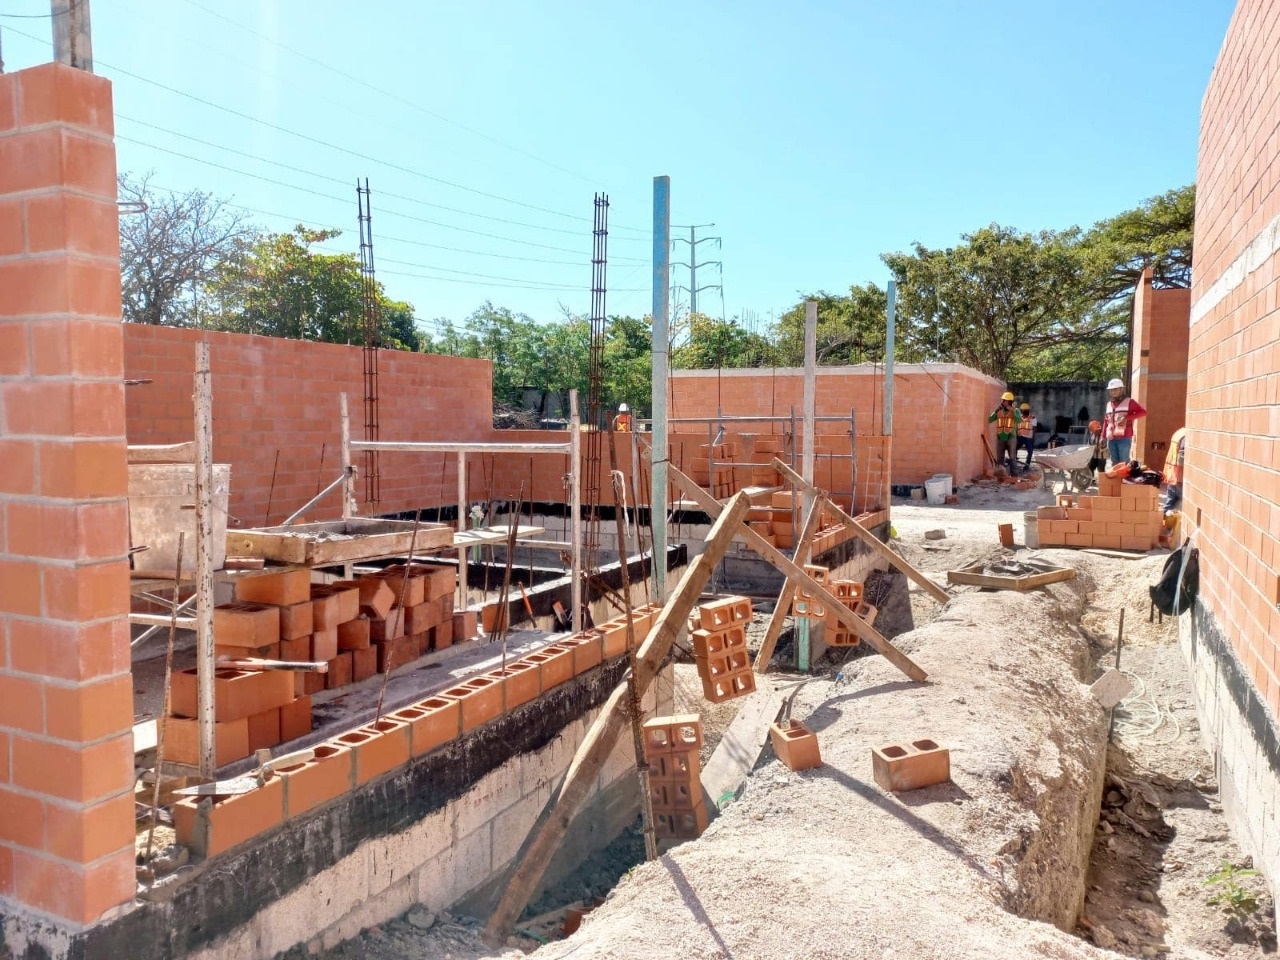 Sedatu sanciona a constructora del mercado de Ciudad del Carmen